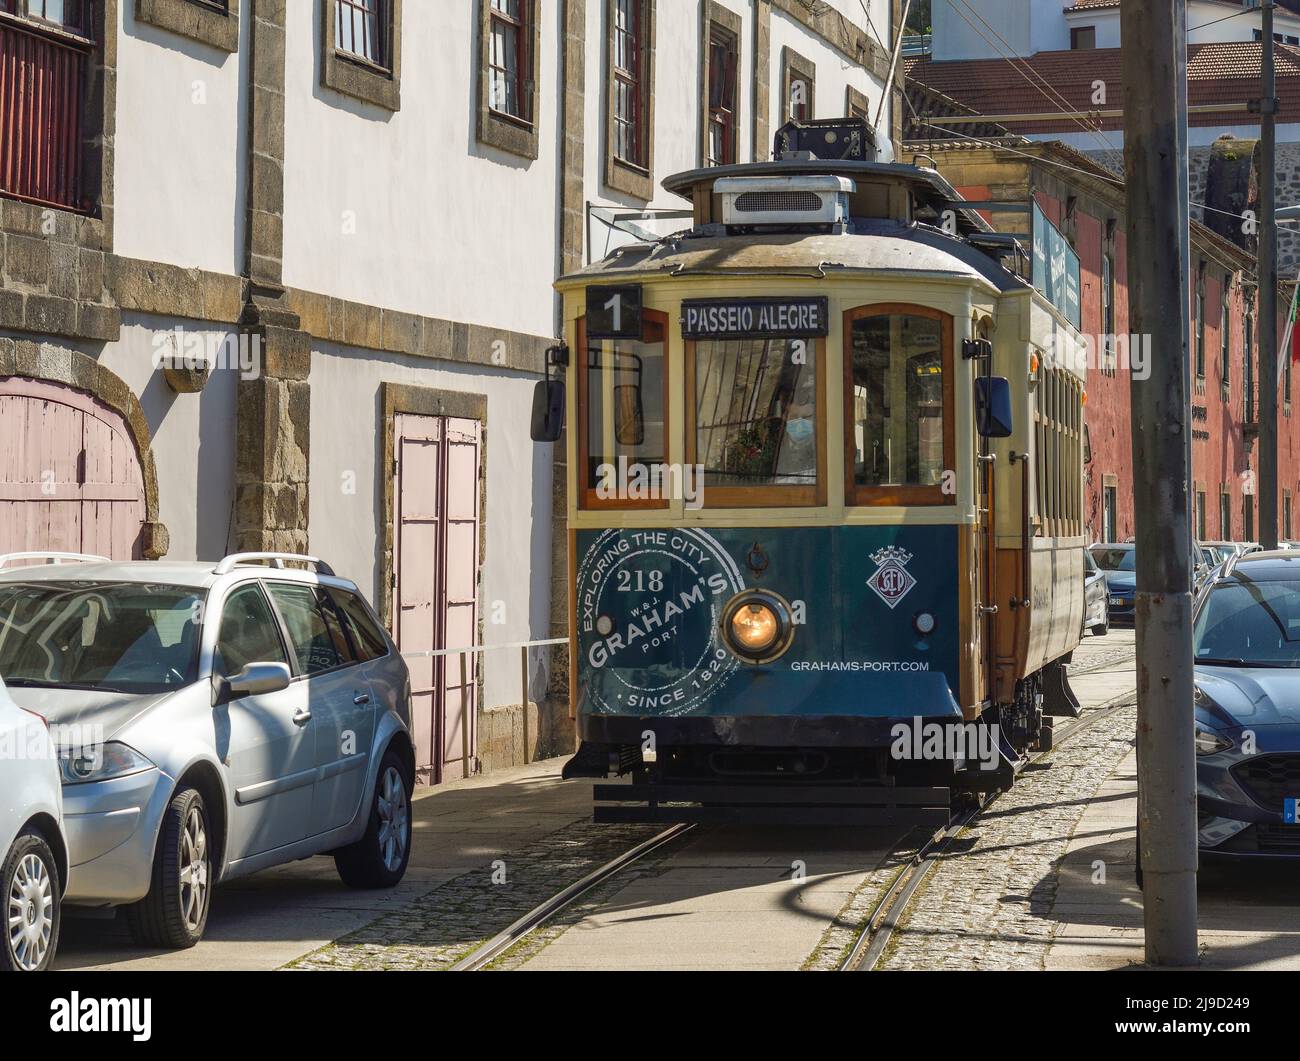 Porto tram Stock Photo